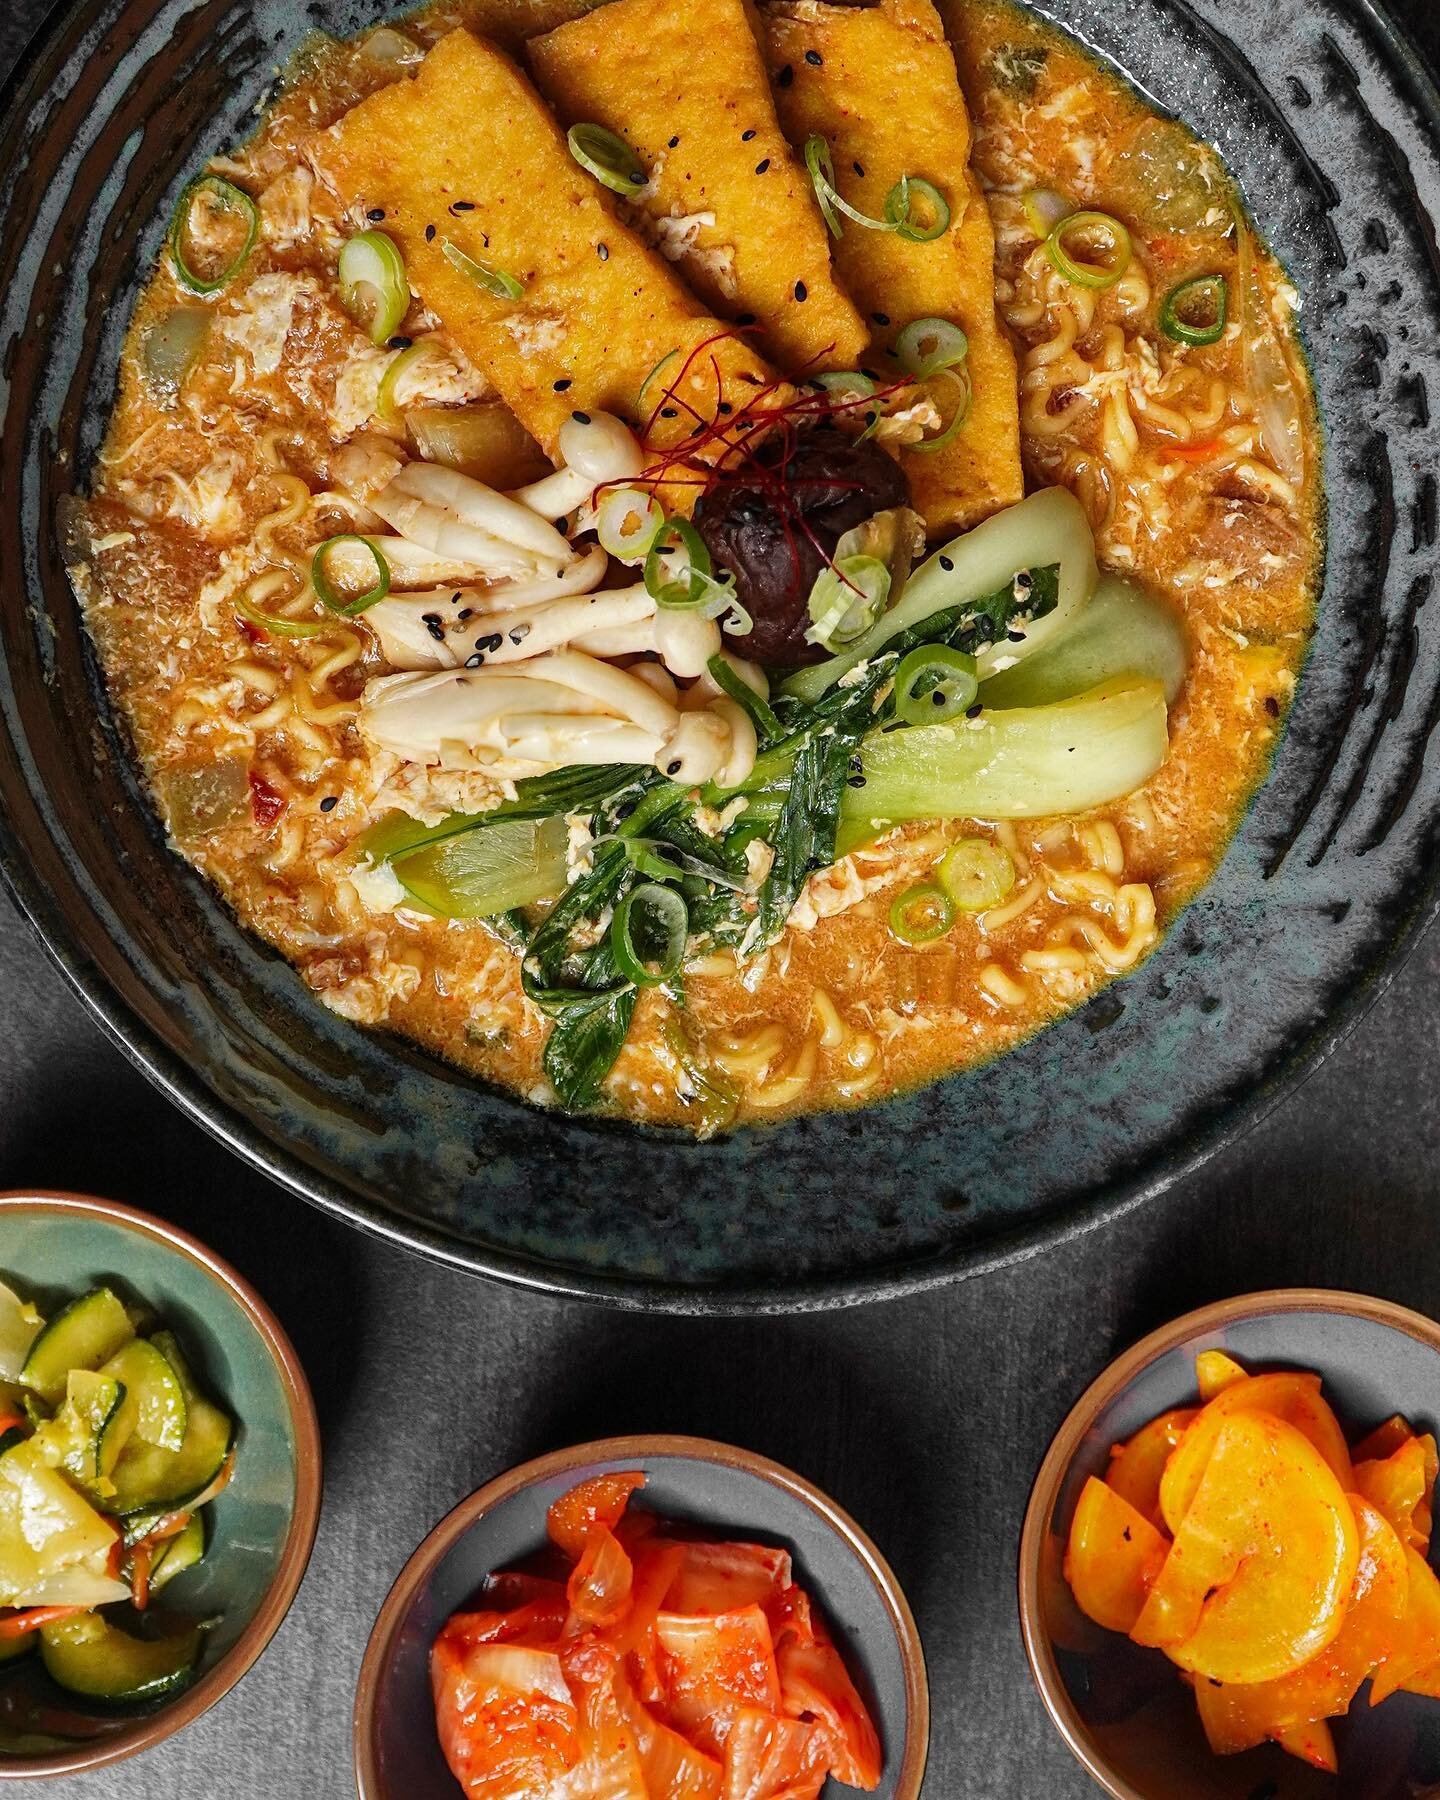 Vegetarian Deonjang Dubu Ramen to warm you up these cold days~🍜

#praha #prague #korean #food #koreanfood #ramen #praguerestaurant #restauracepraha #kamvpraze #kpopcz